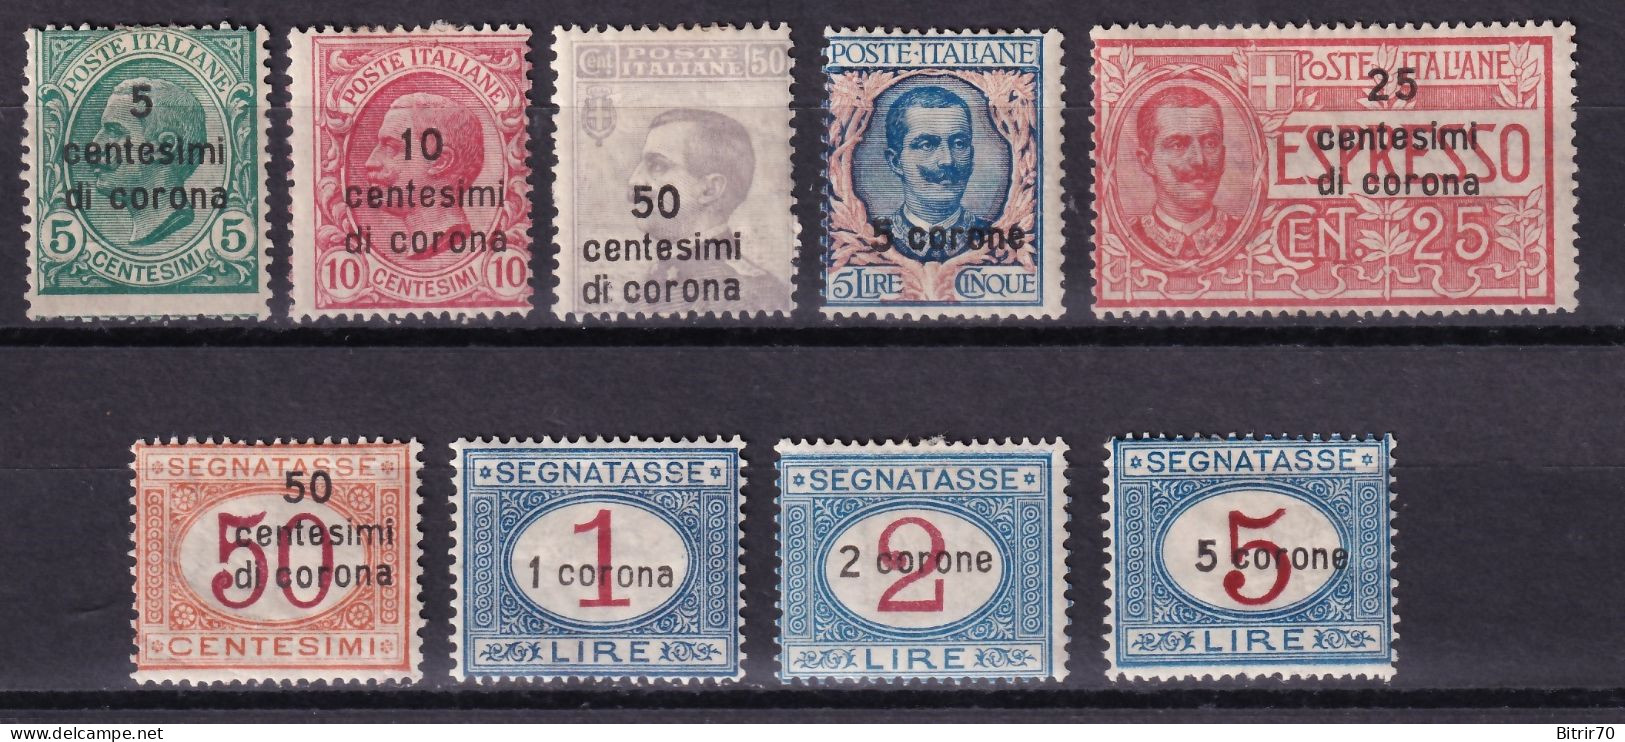 Italia, Dalmatia 1921-1922 Lote De Sellos, Distintos Valores, MH - Dalmatien